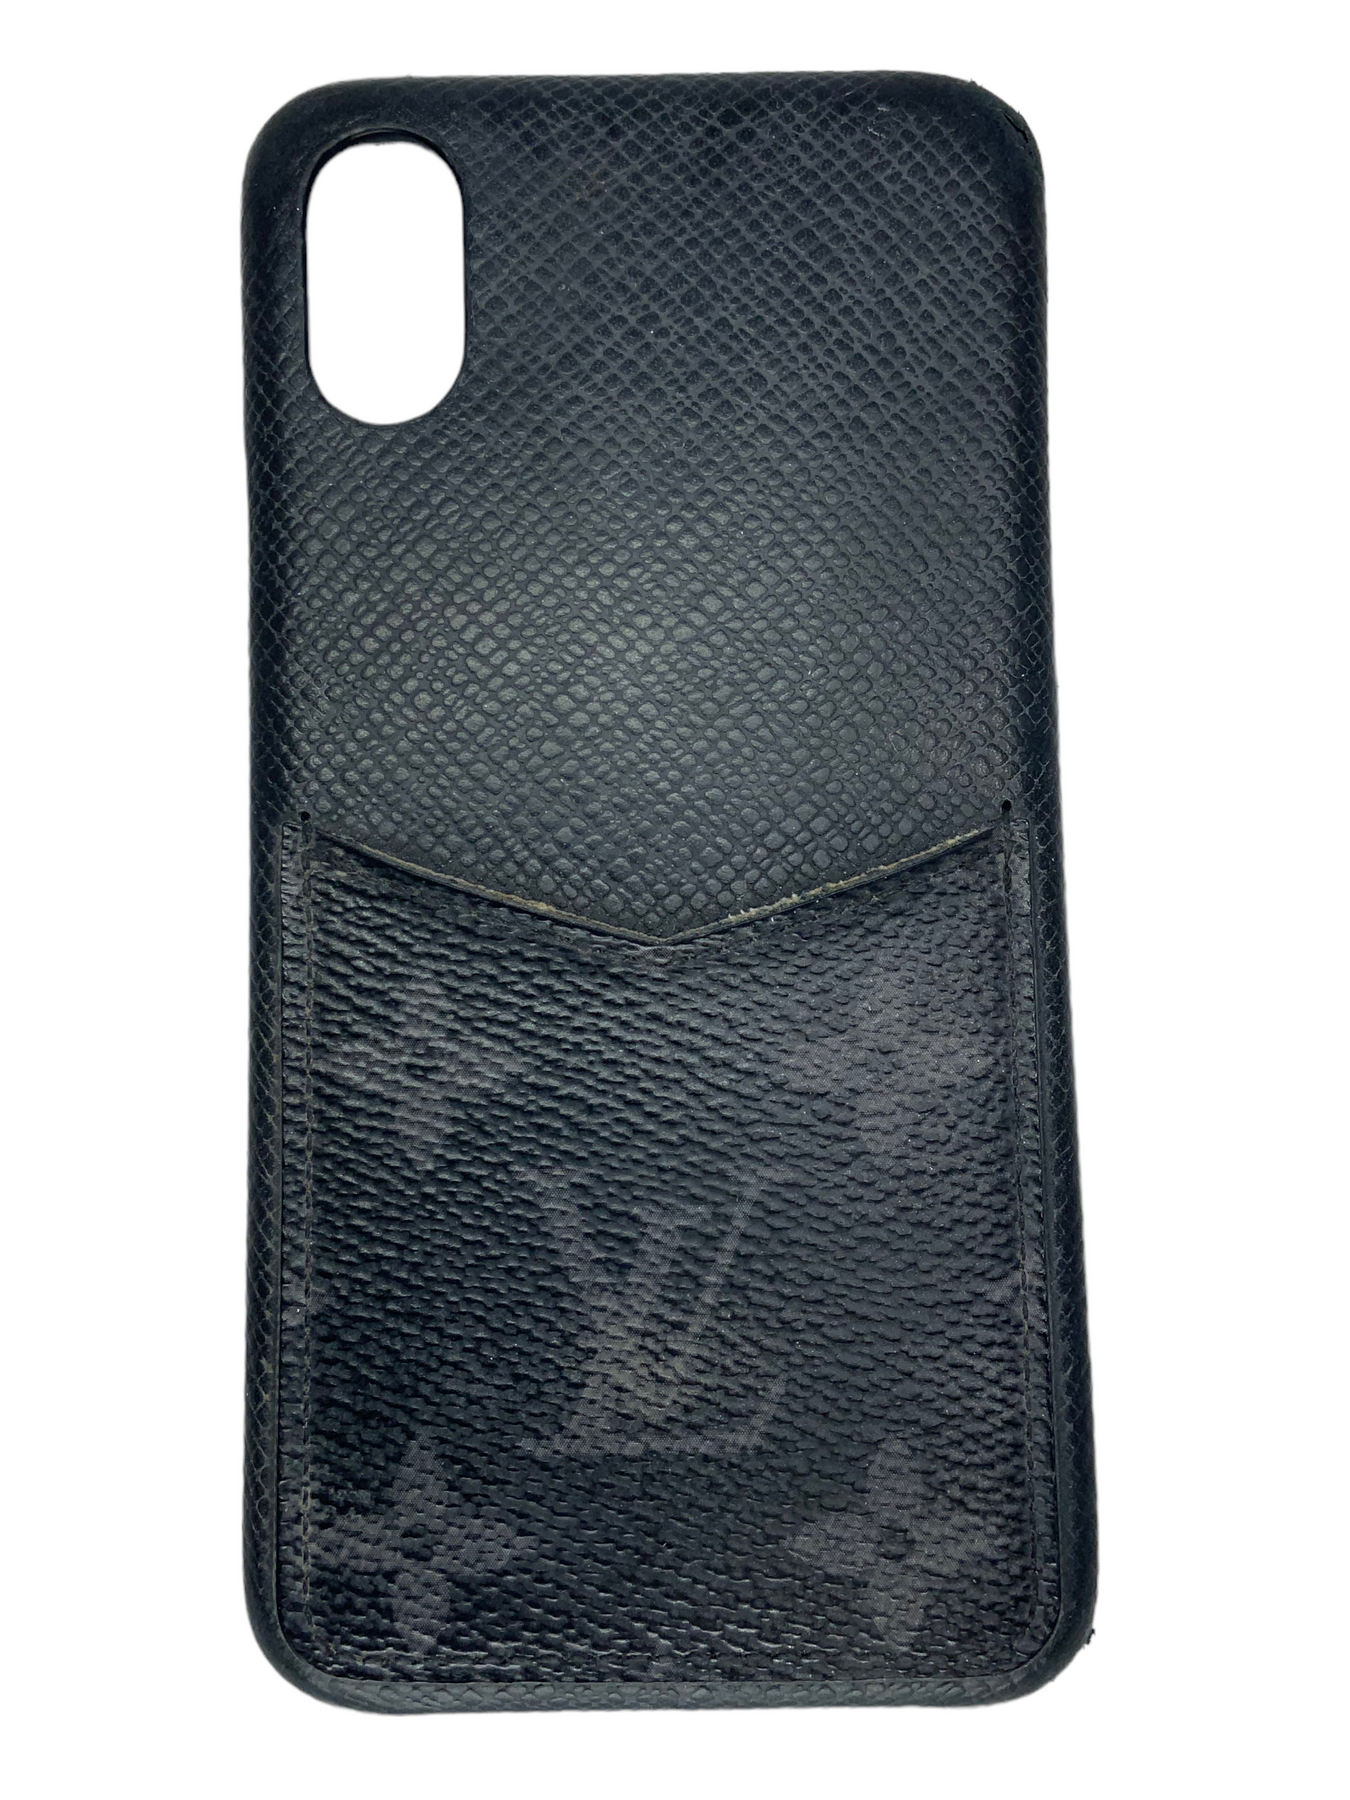 AUTH Louis Vuitton Monogram iPhone X phone case cover & Card holder! L@@K !